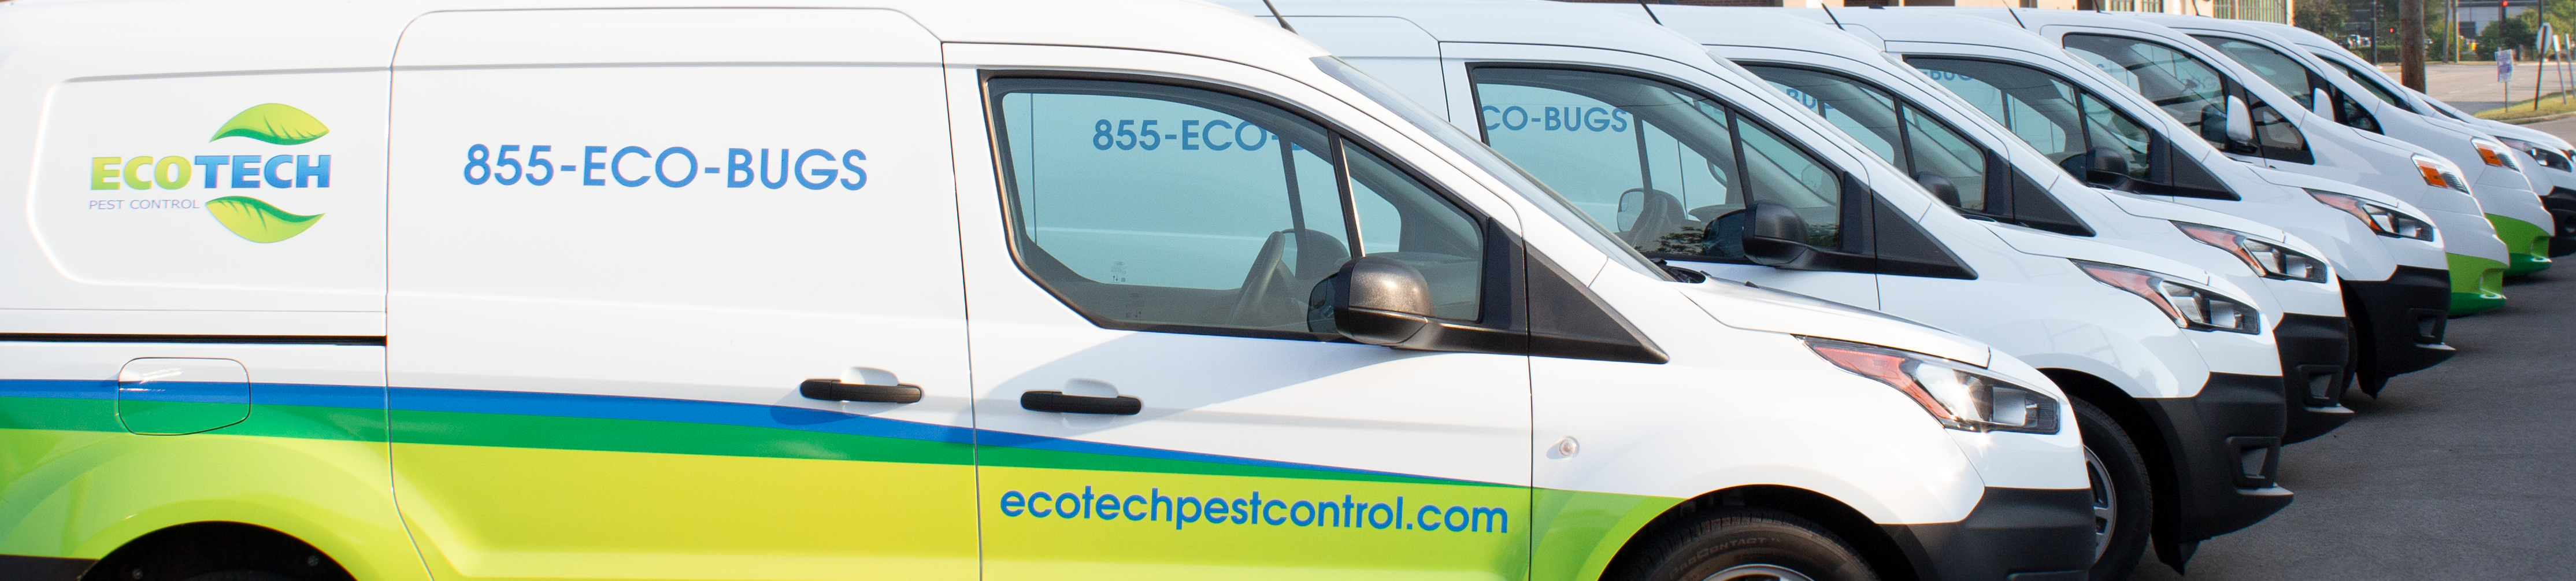 Eco Tech Pest Control Trucks